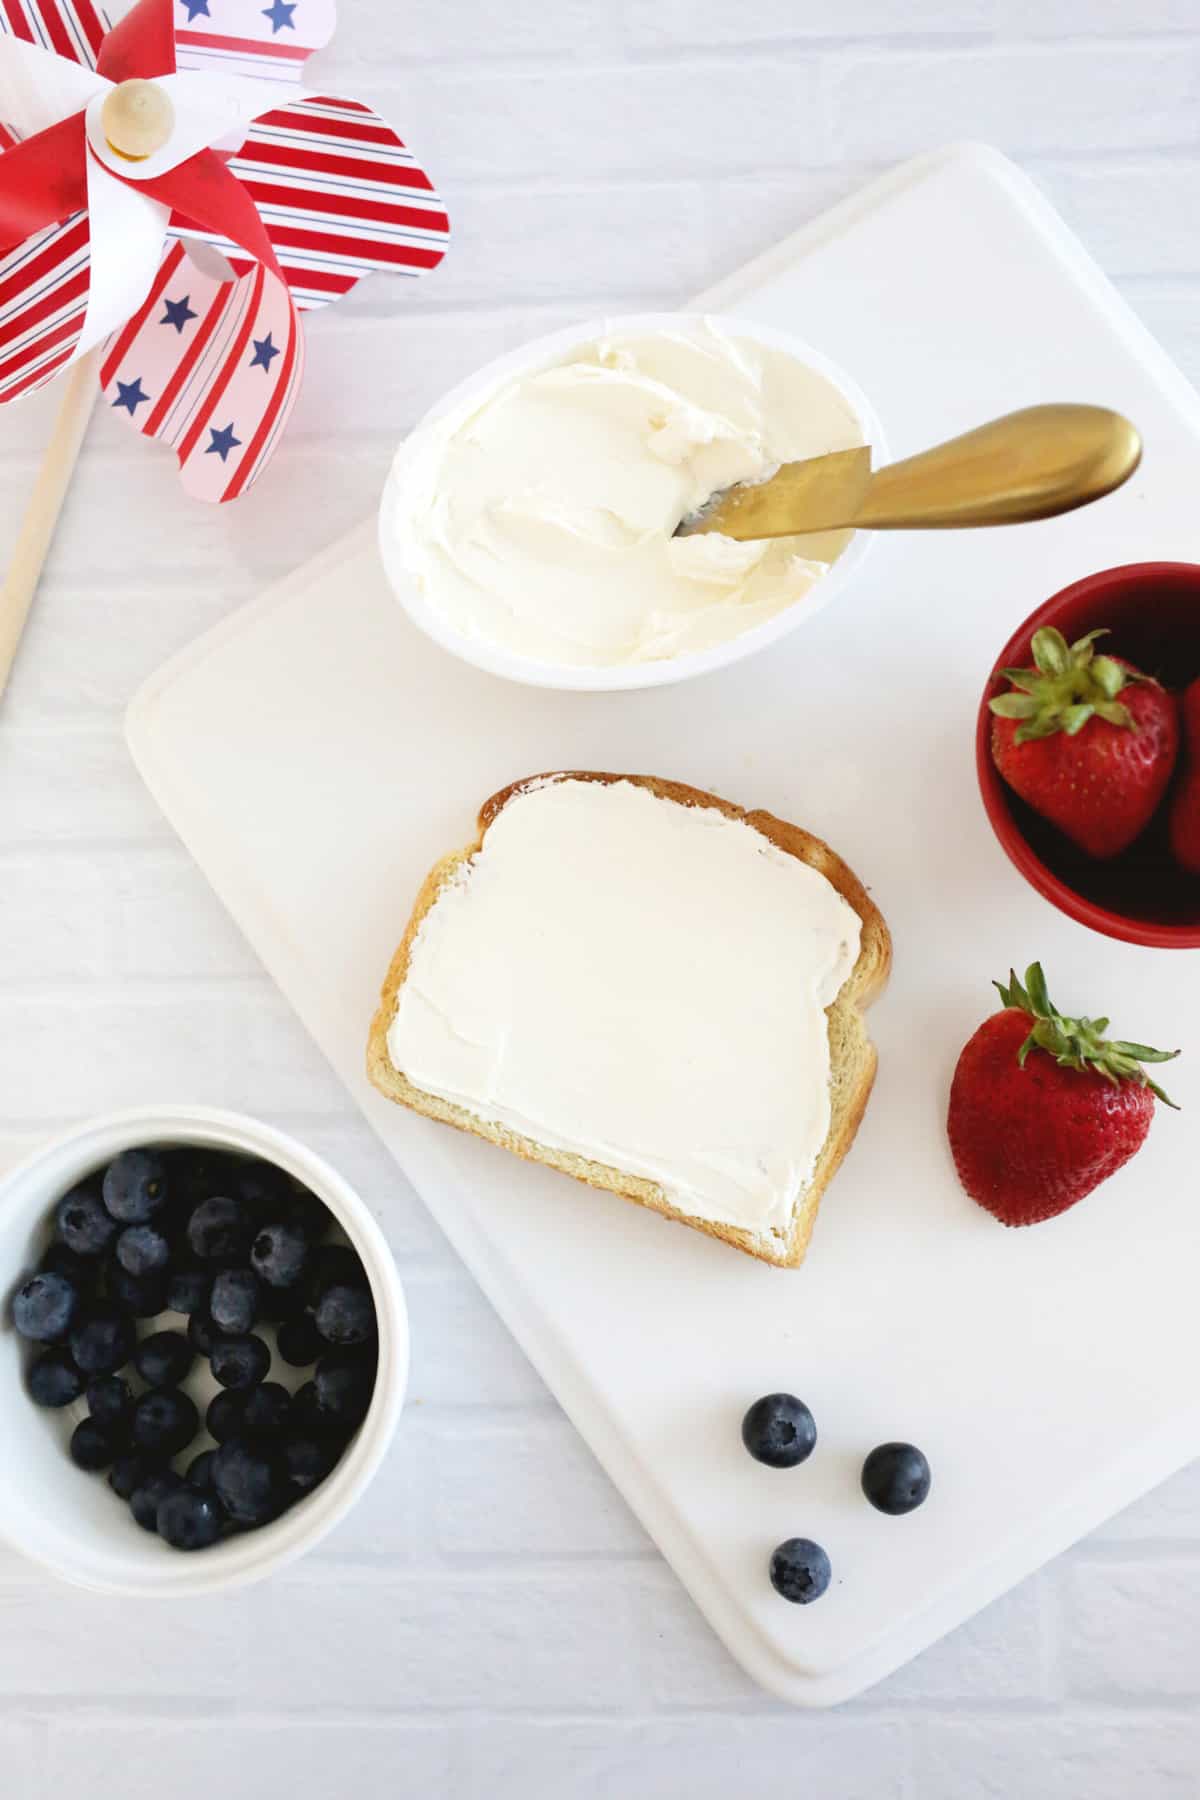 cream cheese toast prepared to make american flag toast